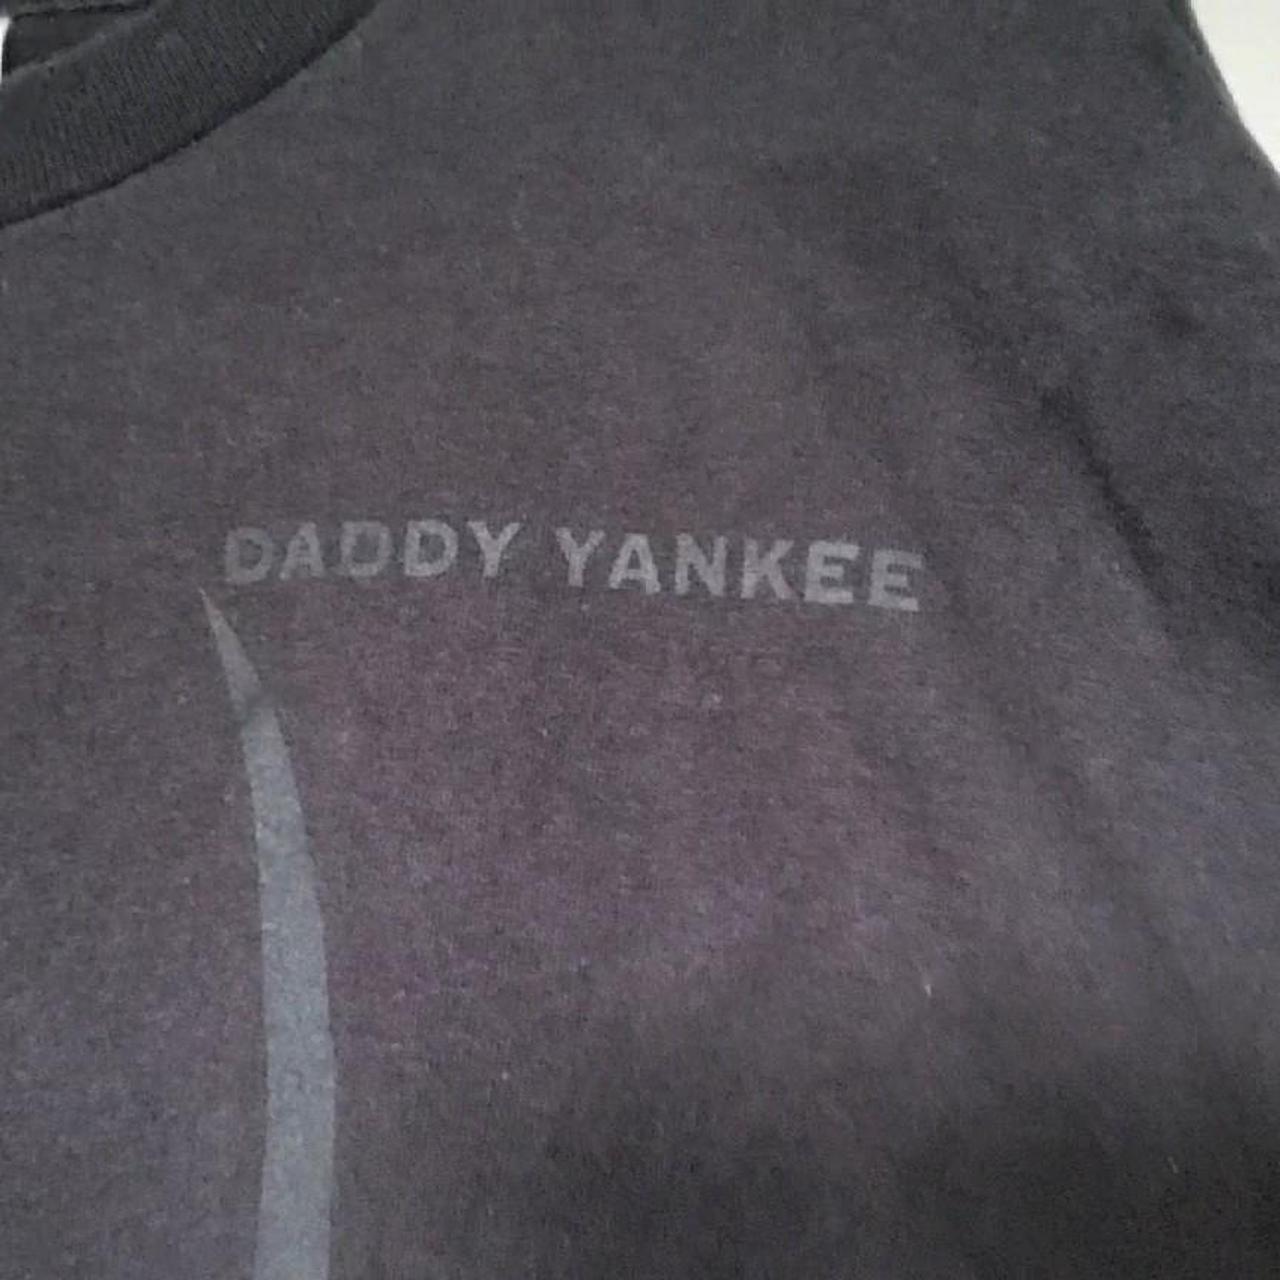 DADDY YANKEE VINTAGE TEE - Raptee - T-Shirt